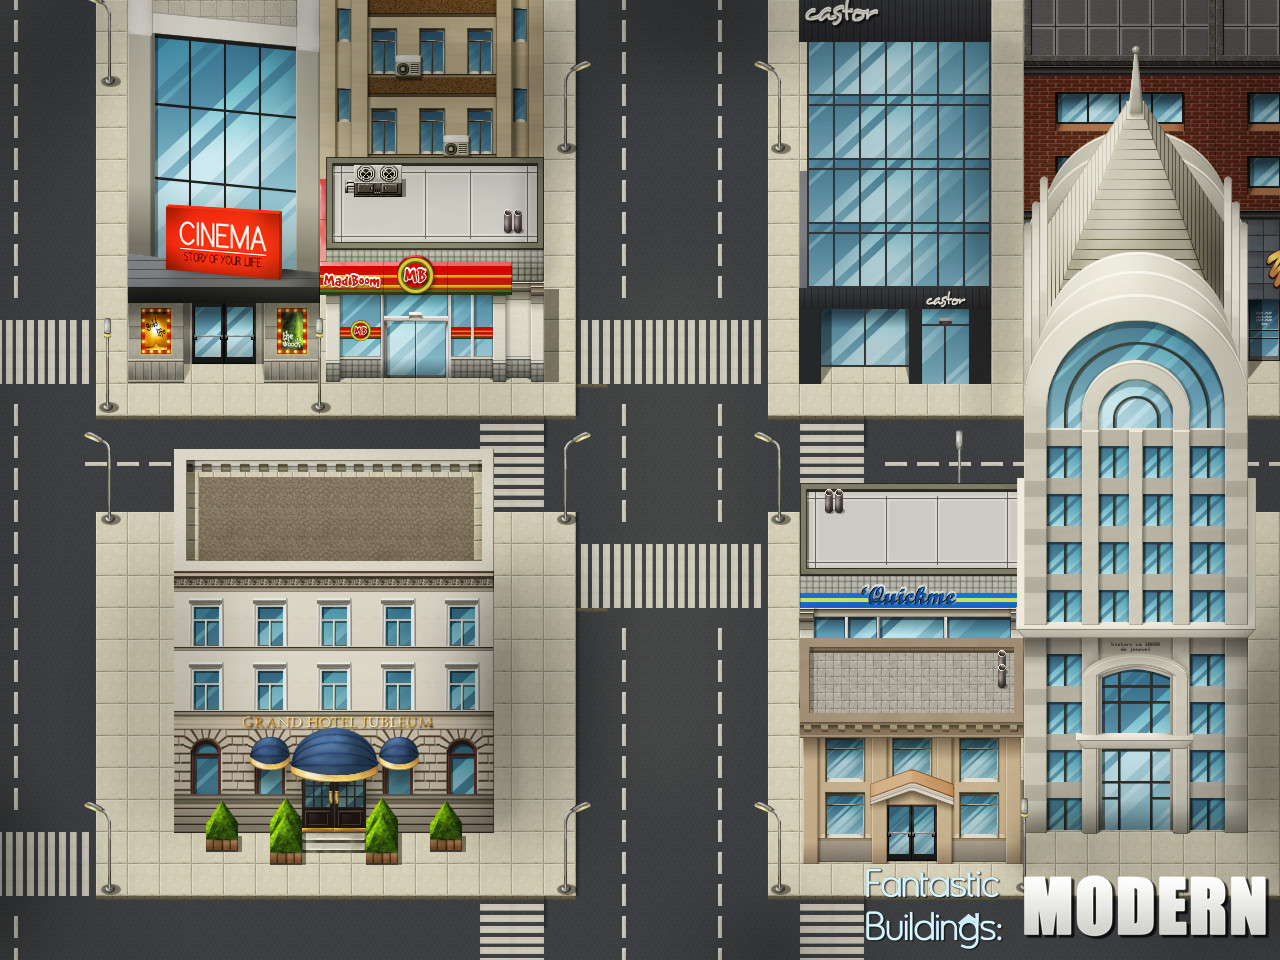 RPG Maker VX - Ace Fantastic Buildings: Modern DLC EU Steam CD Key [USD 5.07]